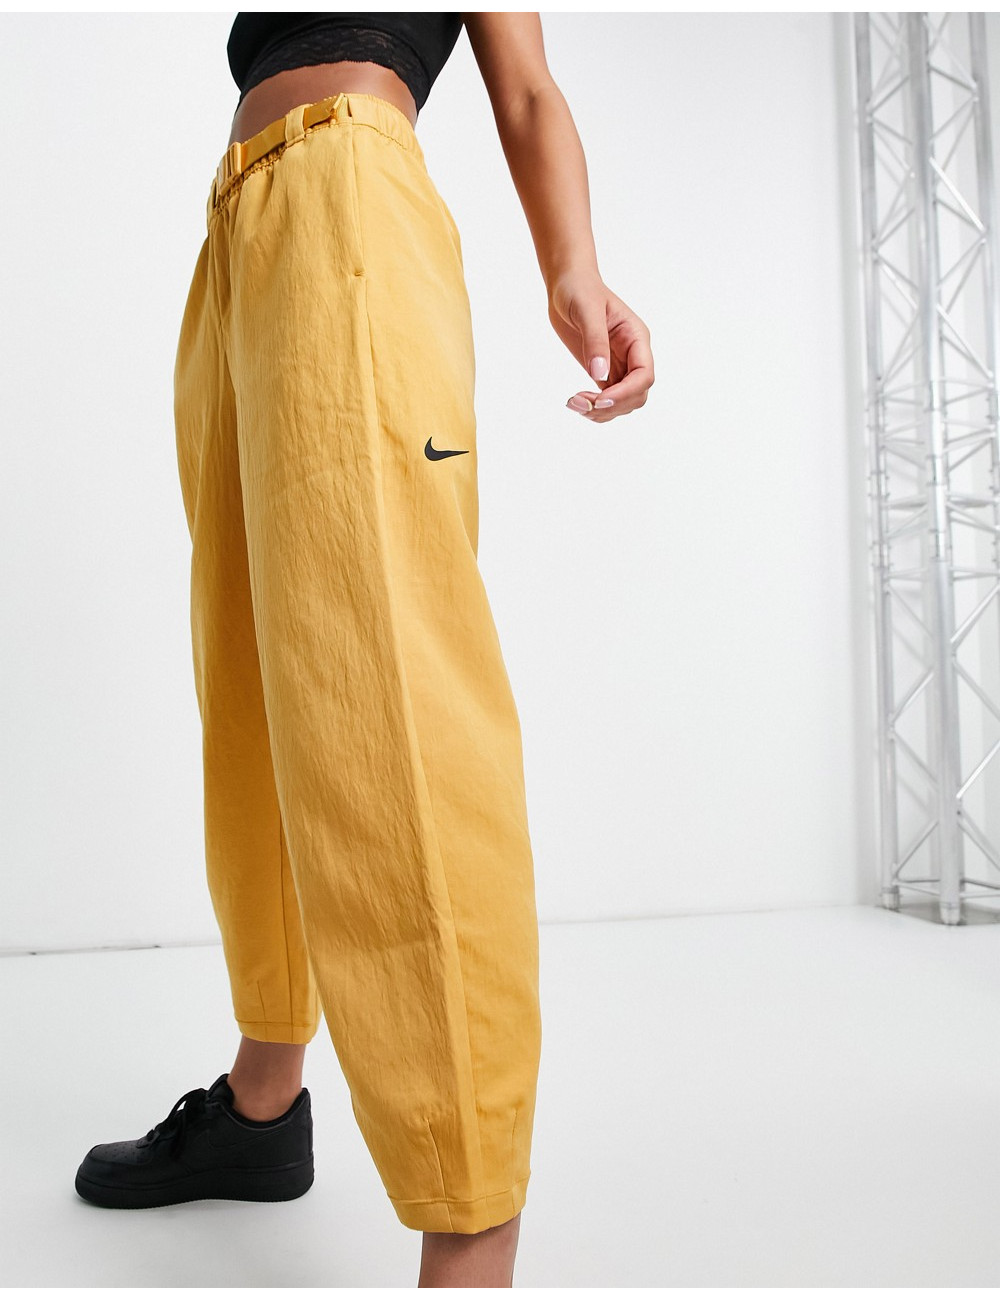 Nike woven trouser in gold...